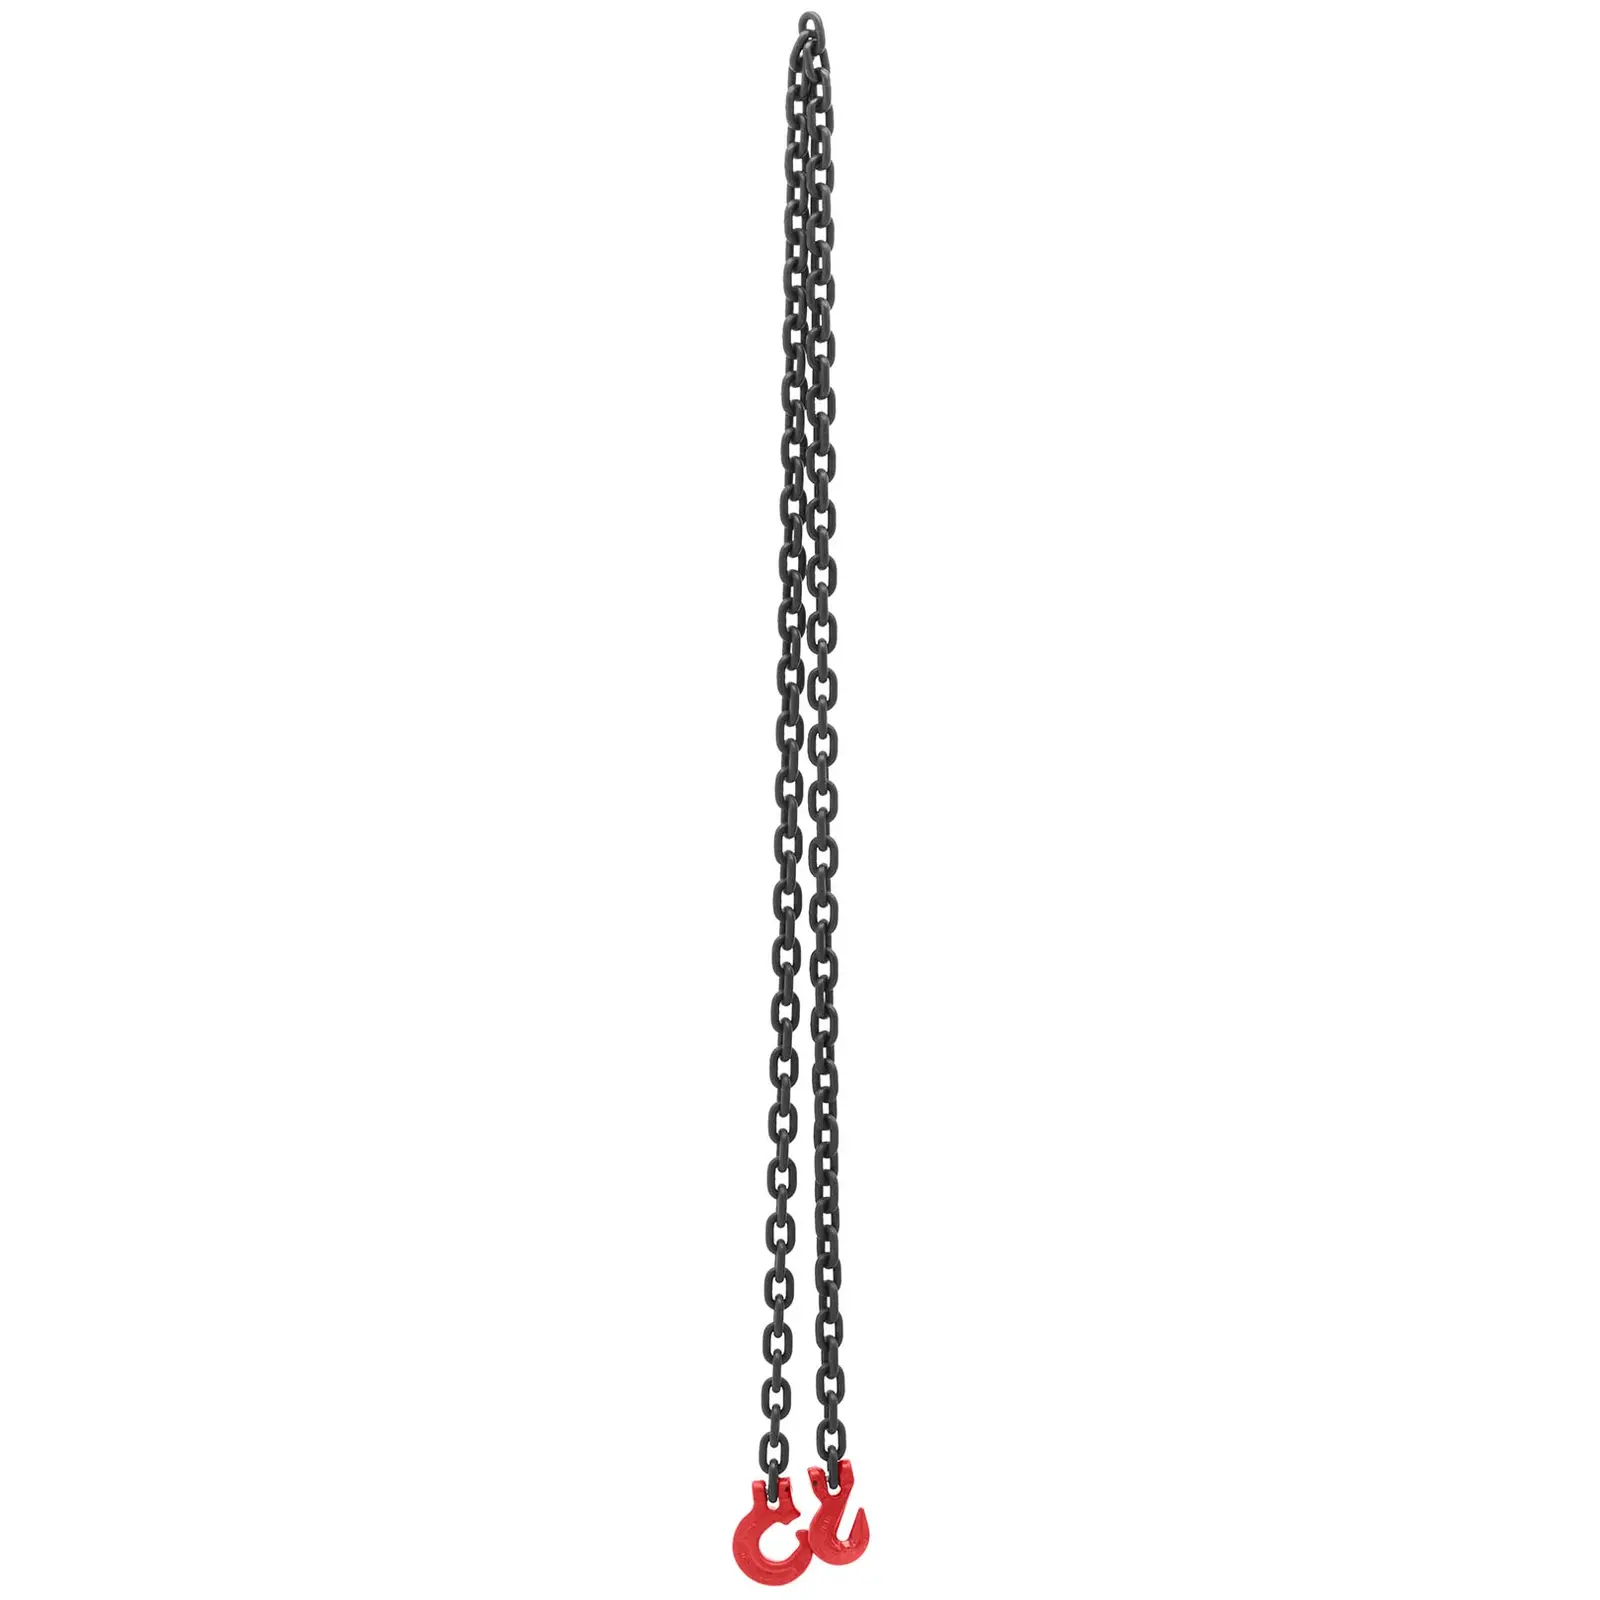 Chokerkette - 8000 kg - 2,5 m - schwarz / rot